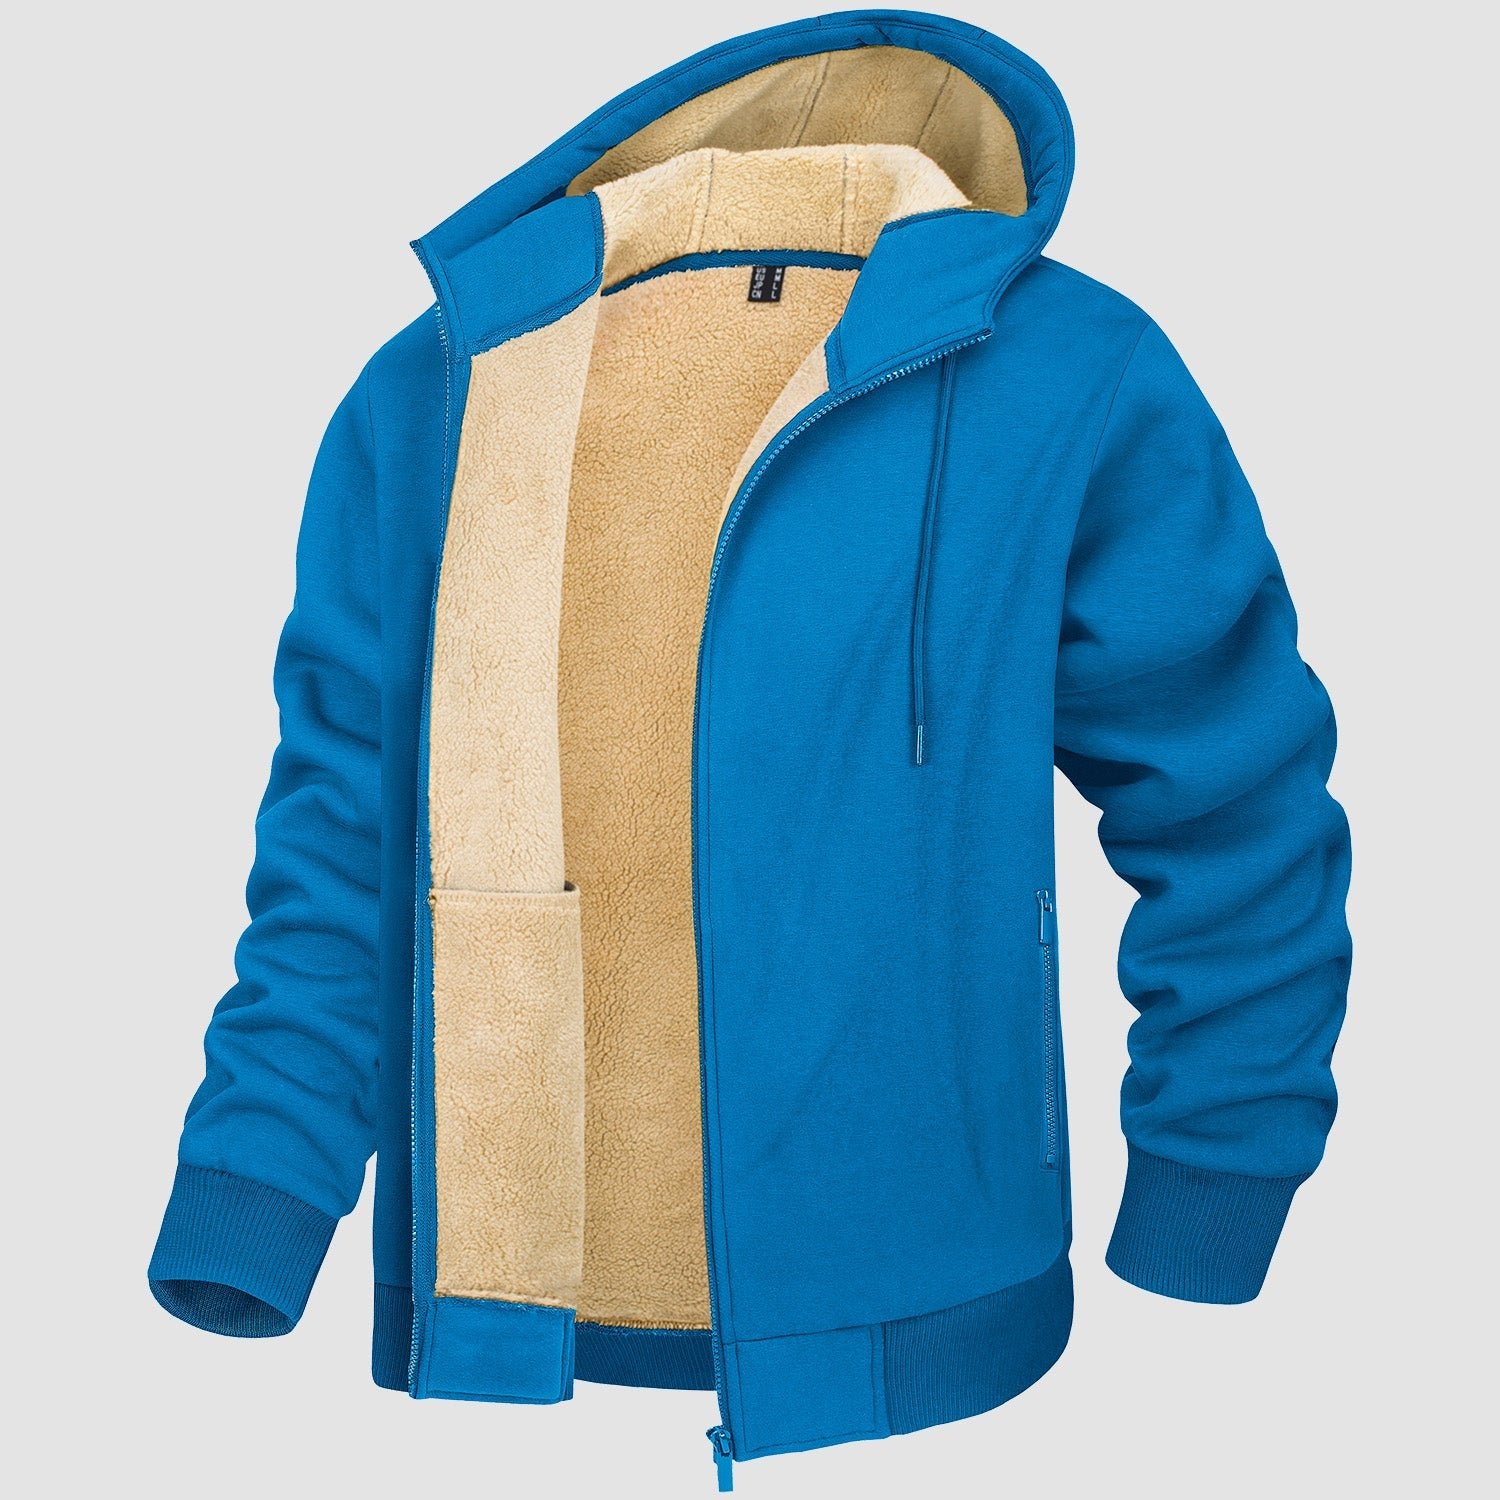 Men's Zipper Hoodie Jacket Fleece Lined Warm Jacket for Winter